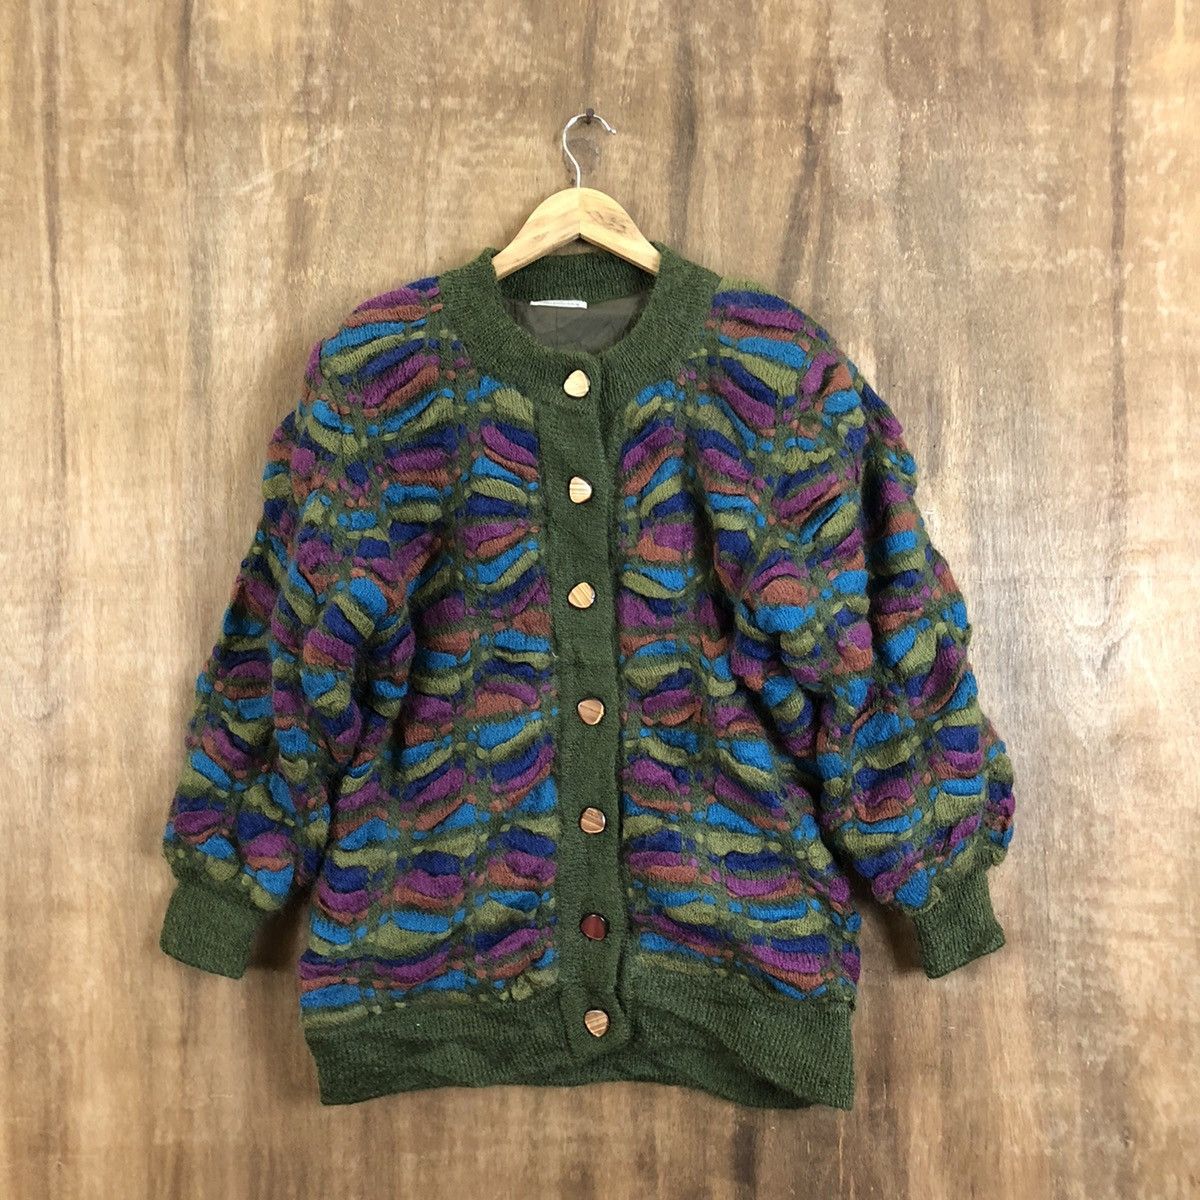 Japanese Brand Joy Roden Multicolor Baggy Knitwear Sweater #076 | Grailed